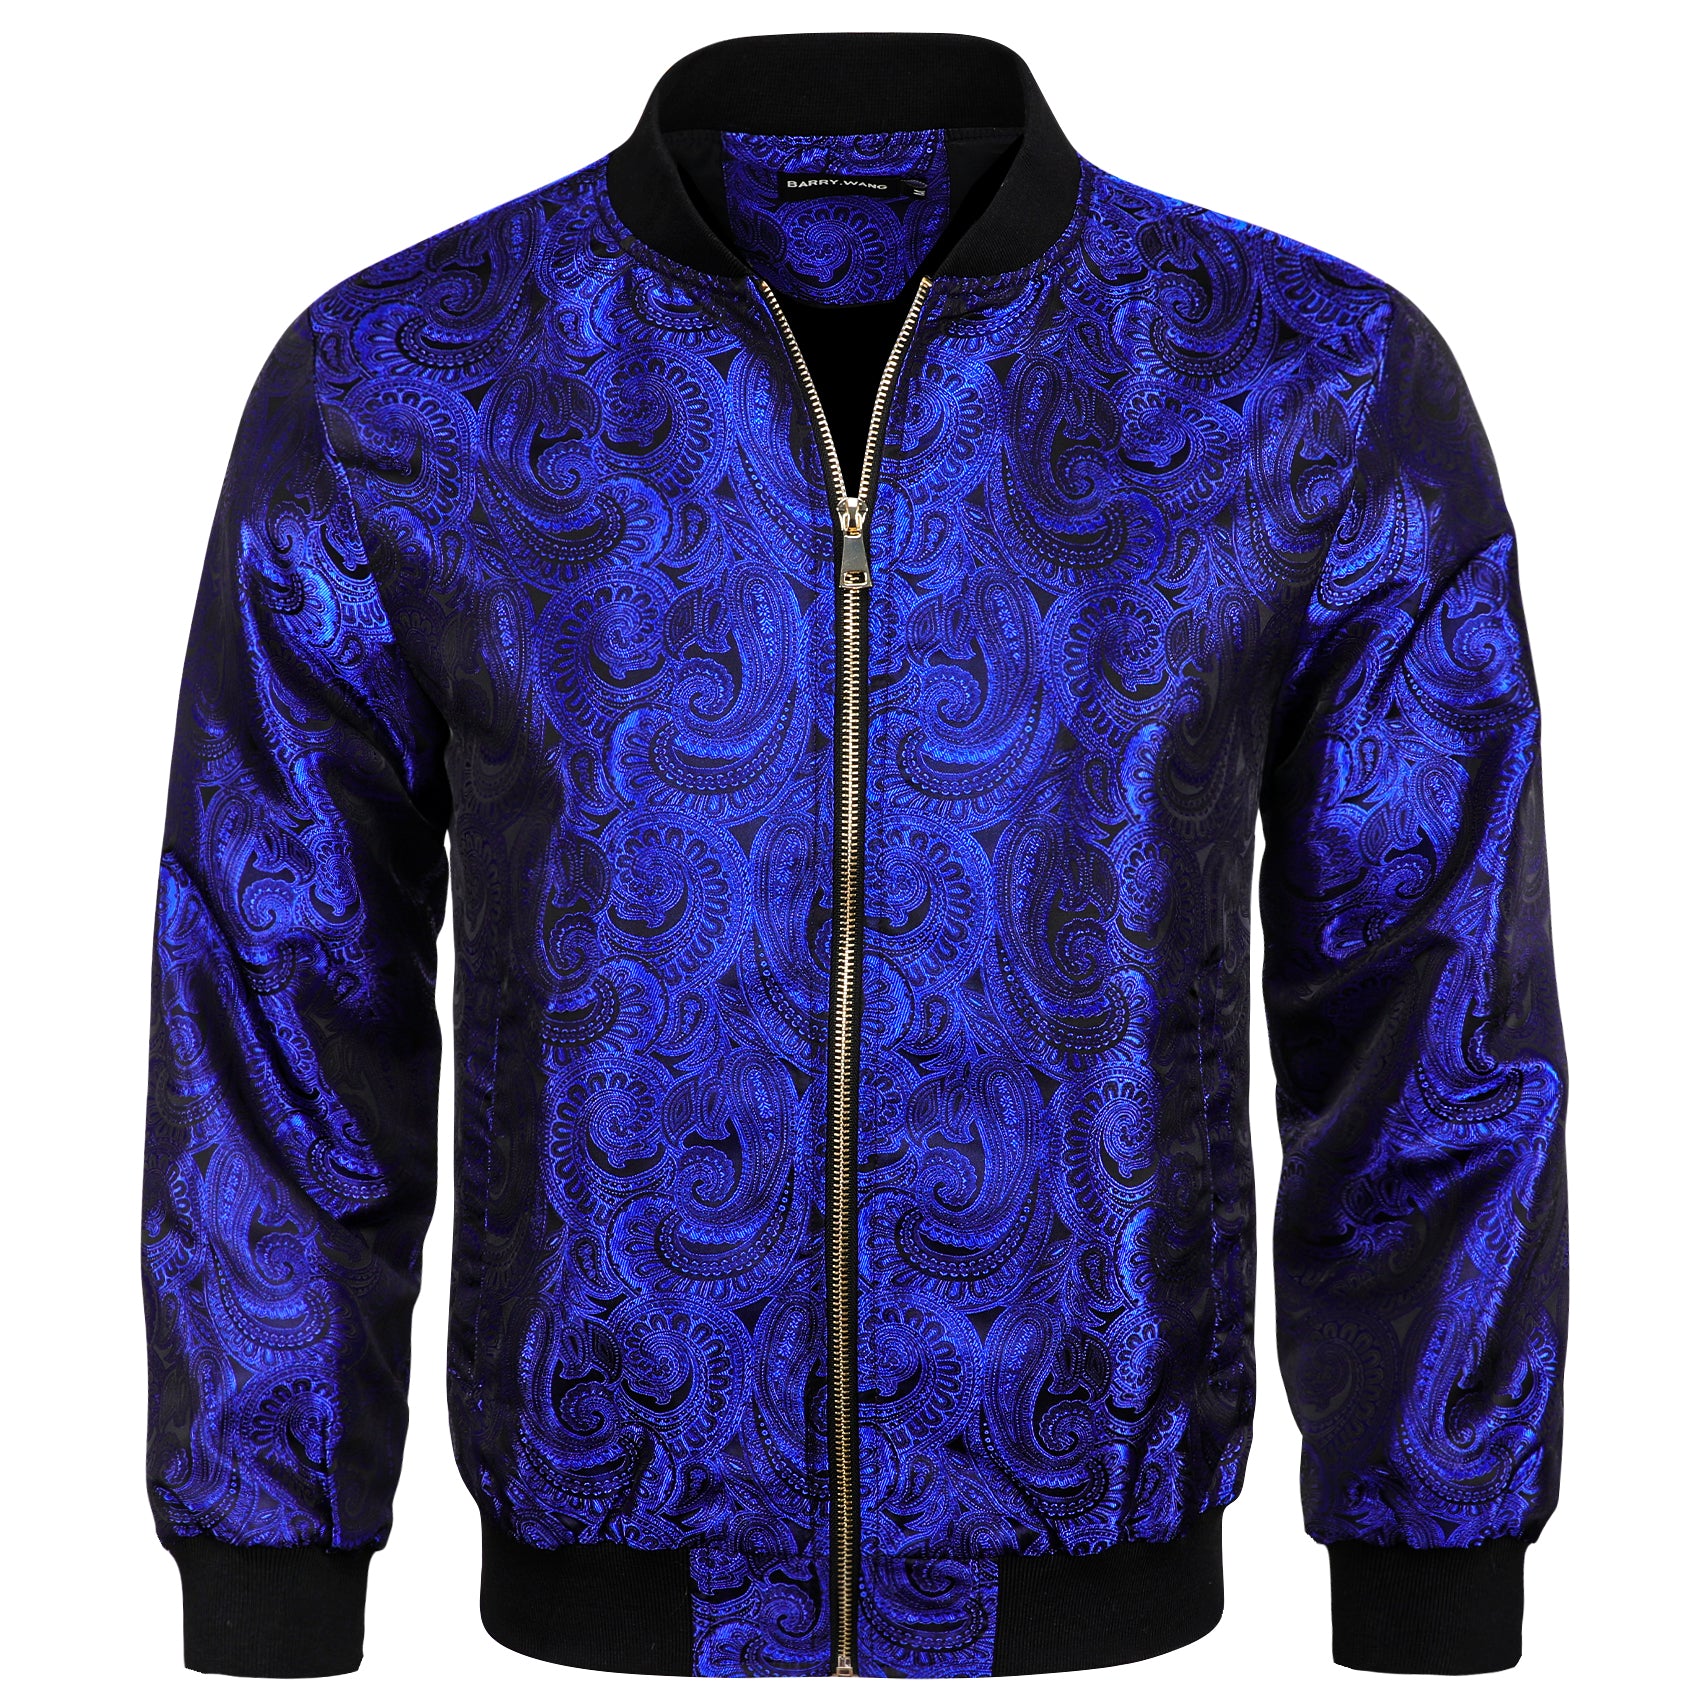 Barry.wang Men's Zipper Jacket Ultra Marine Floral Jacquard Paisley Jacket